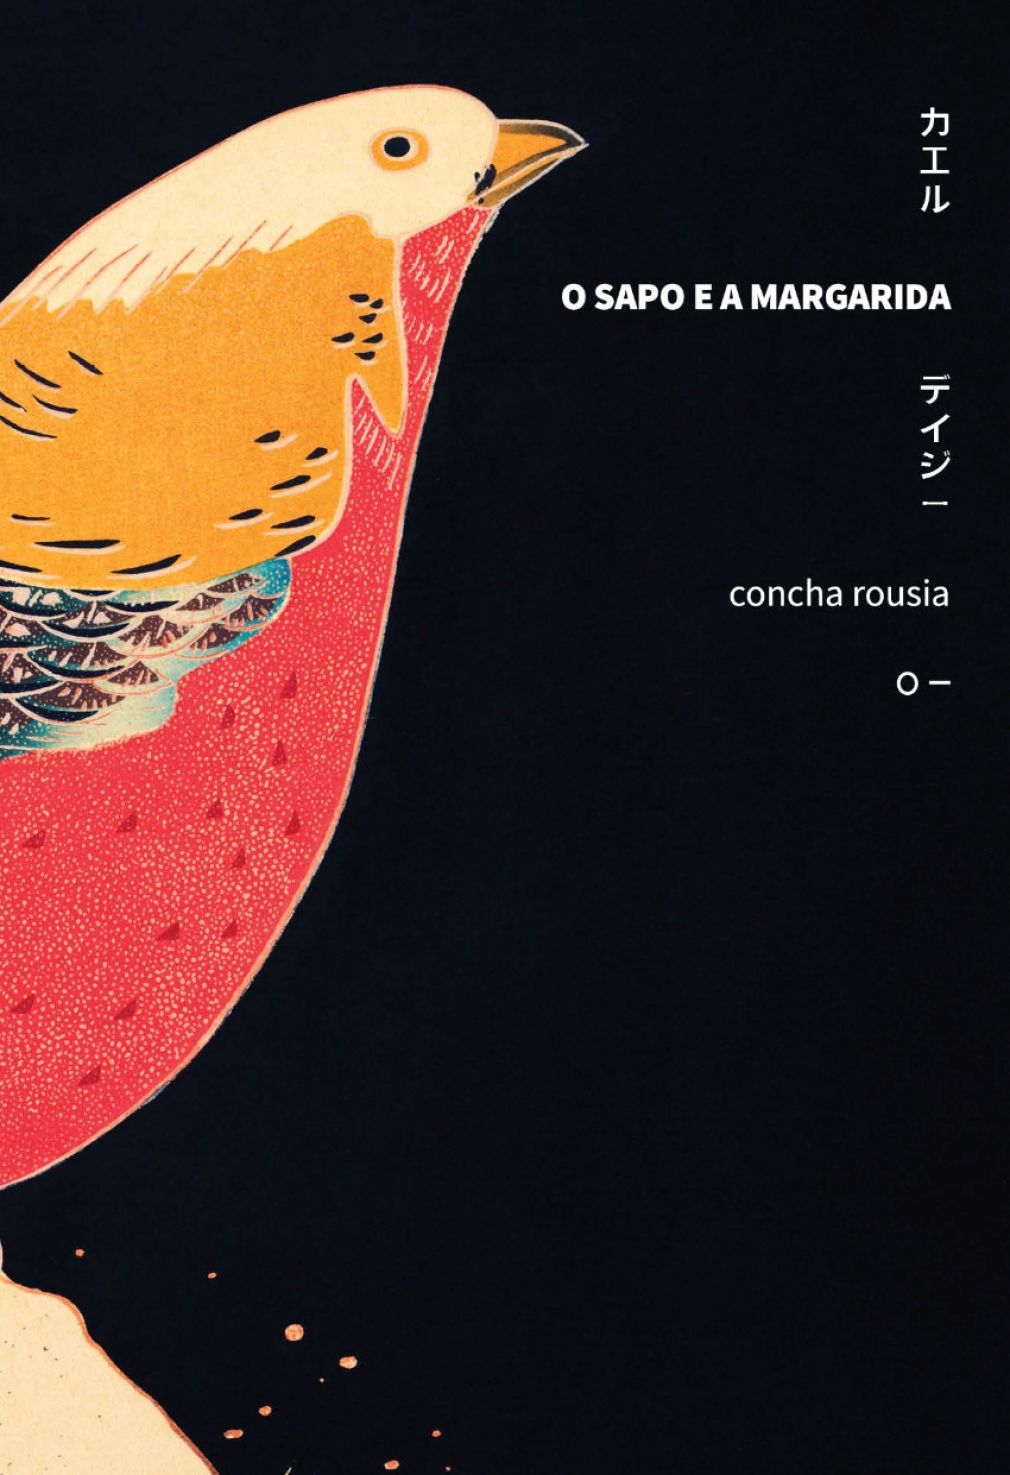 Académica Concha Rousia lança novo livro "O SAPO E A MARGARIDA"